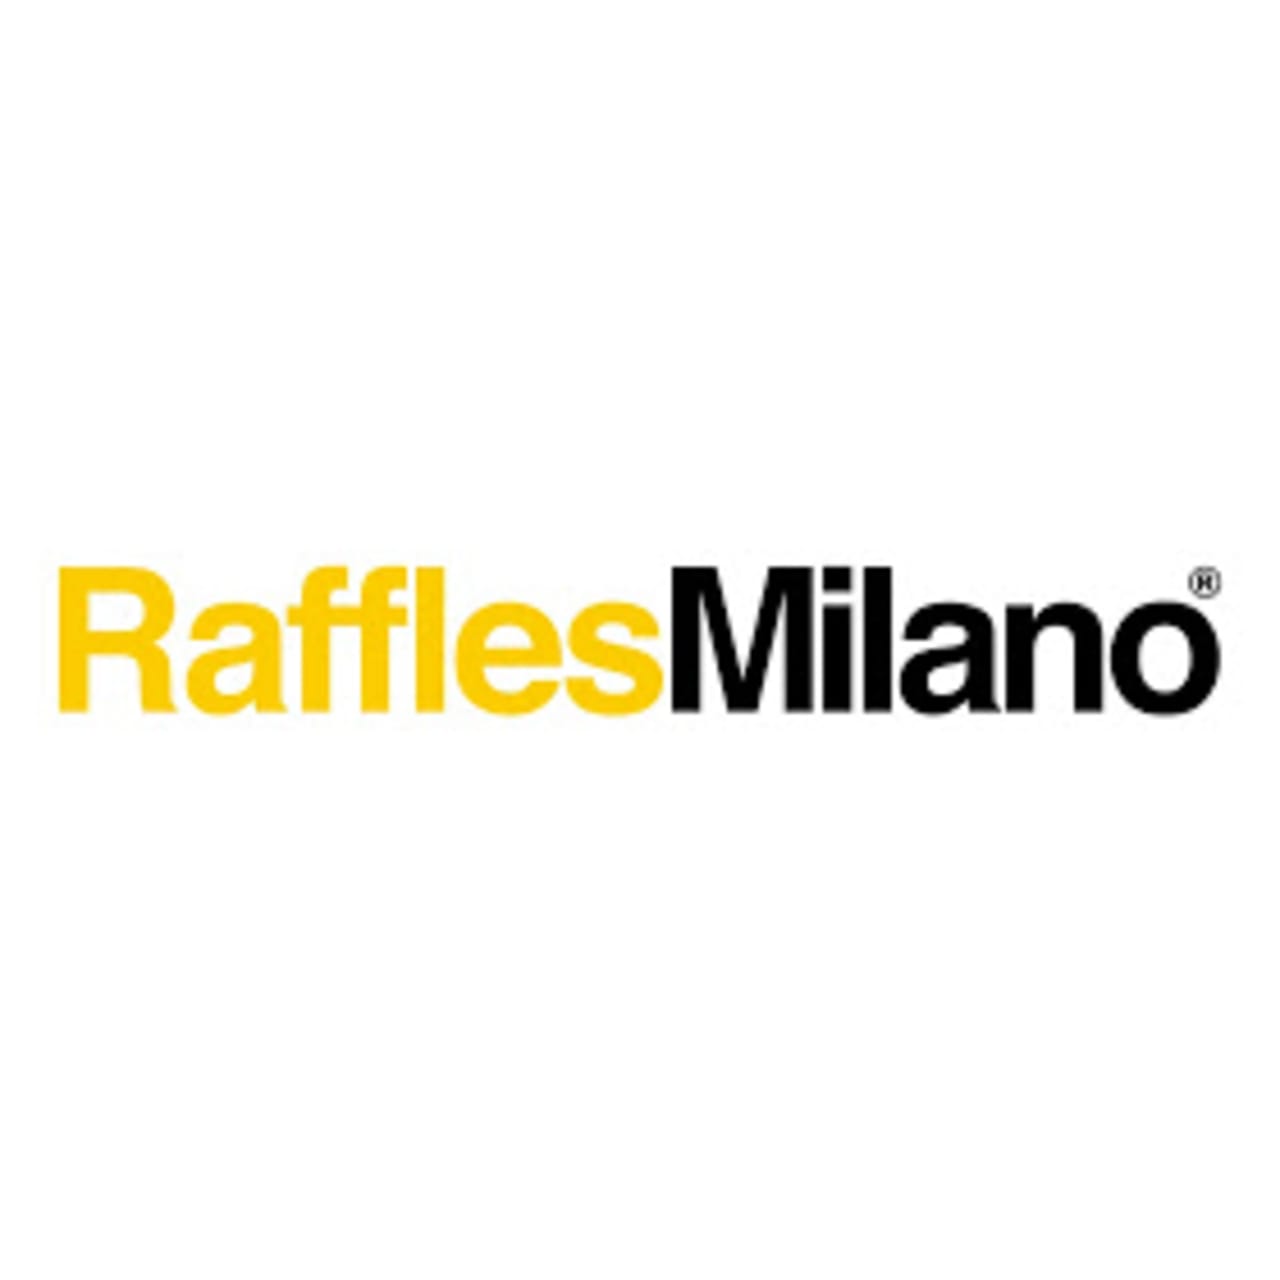 Raffles Milan - International Fashion and Design School 三年视觉设计课程